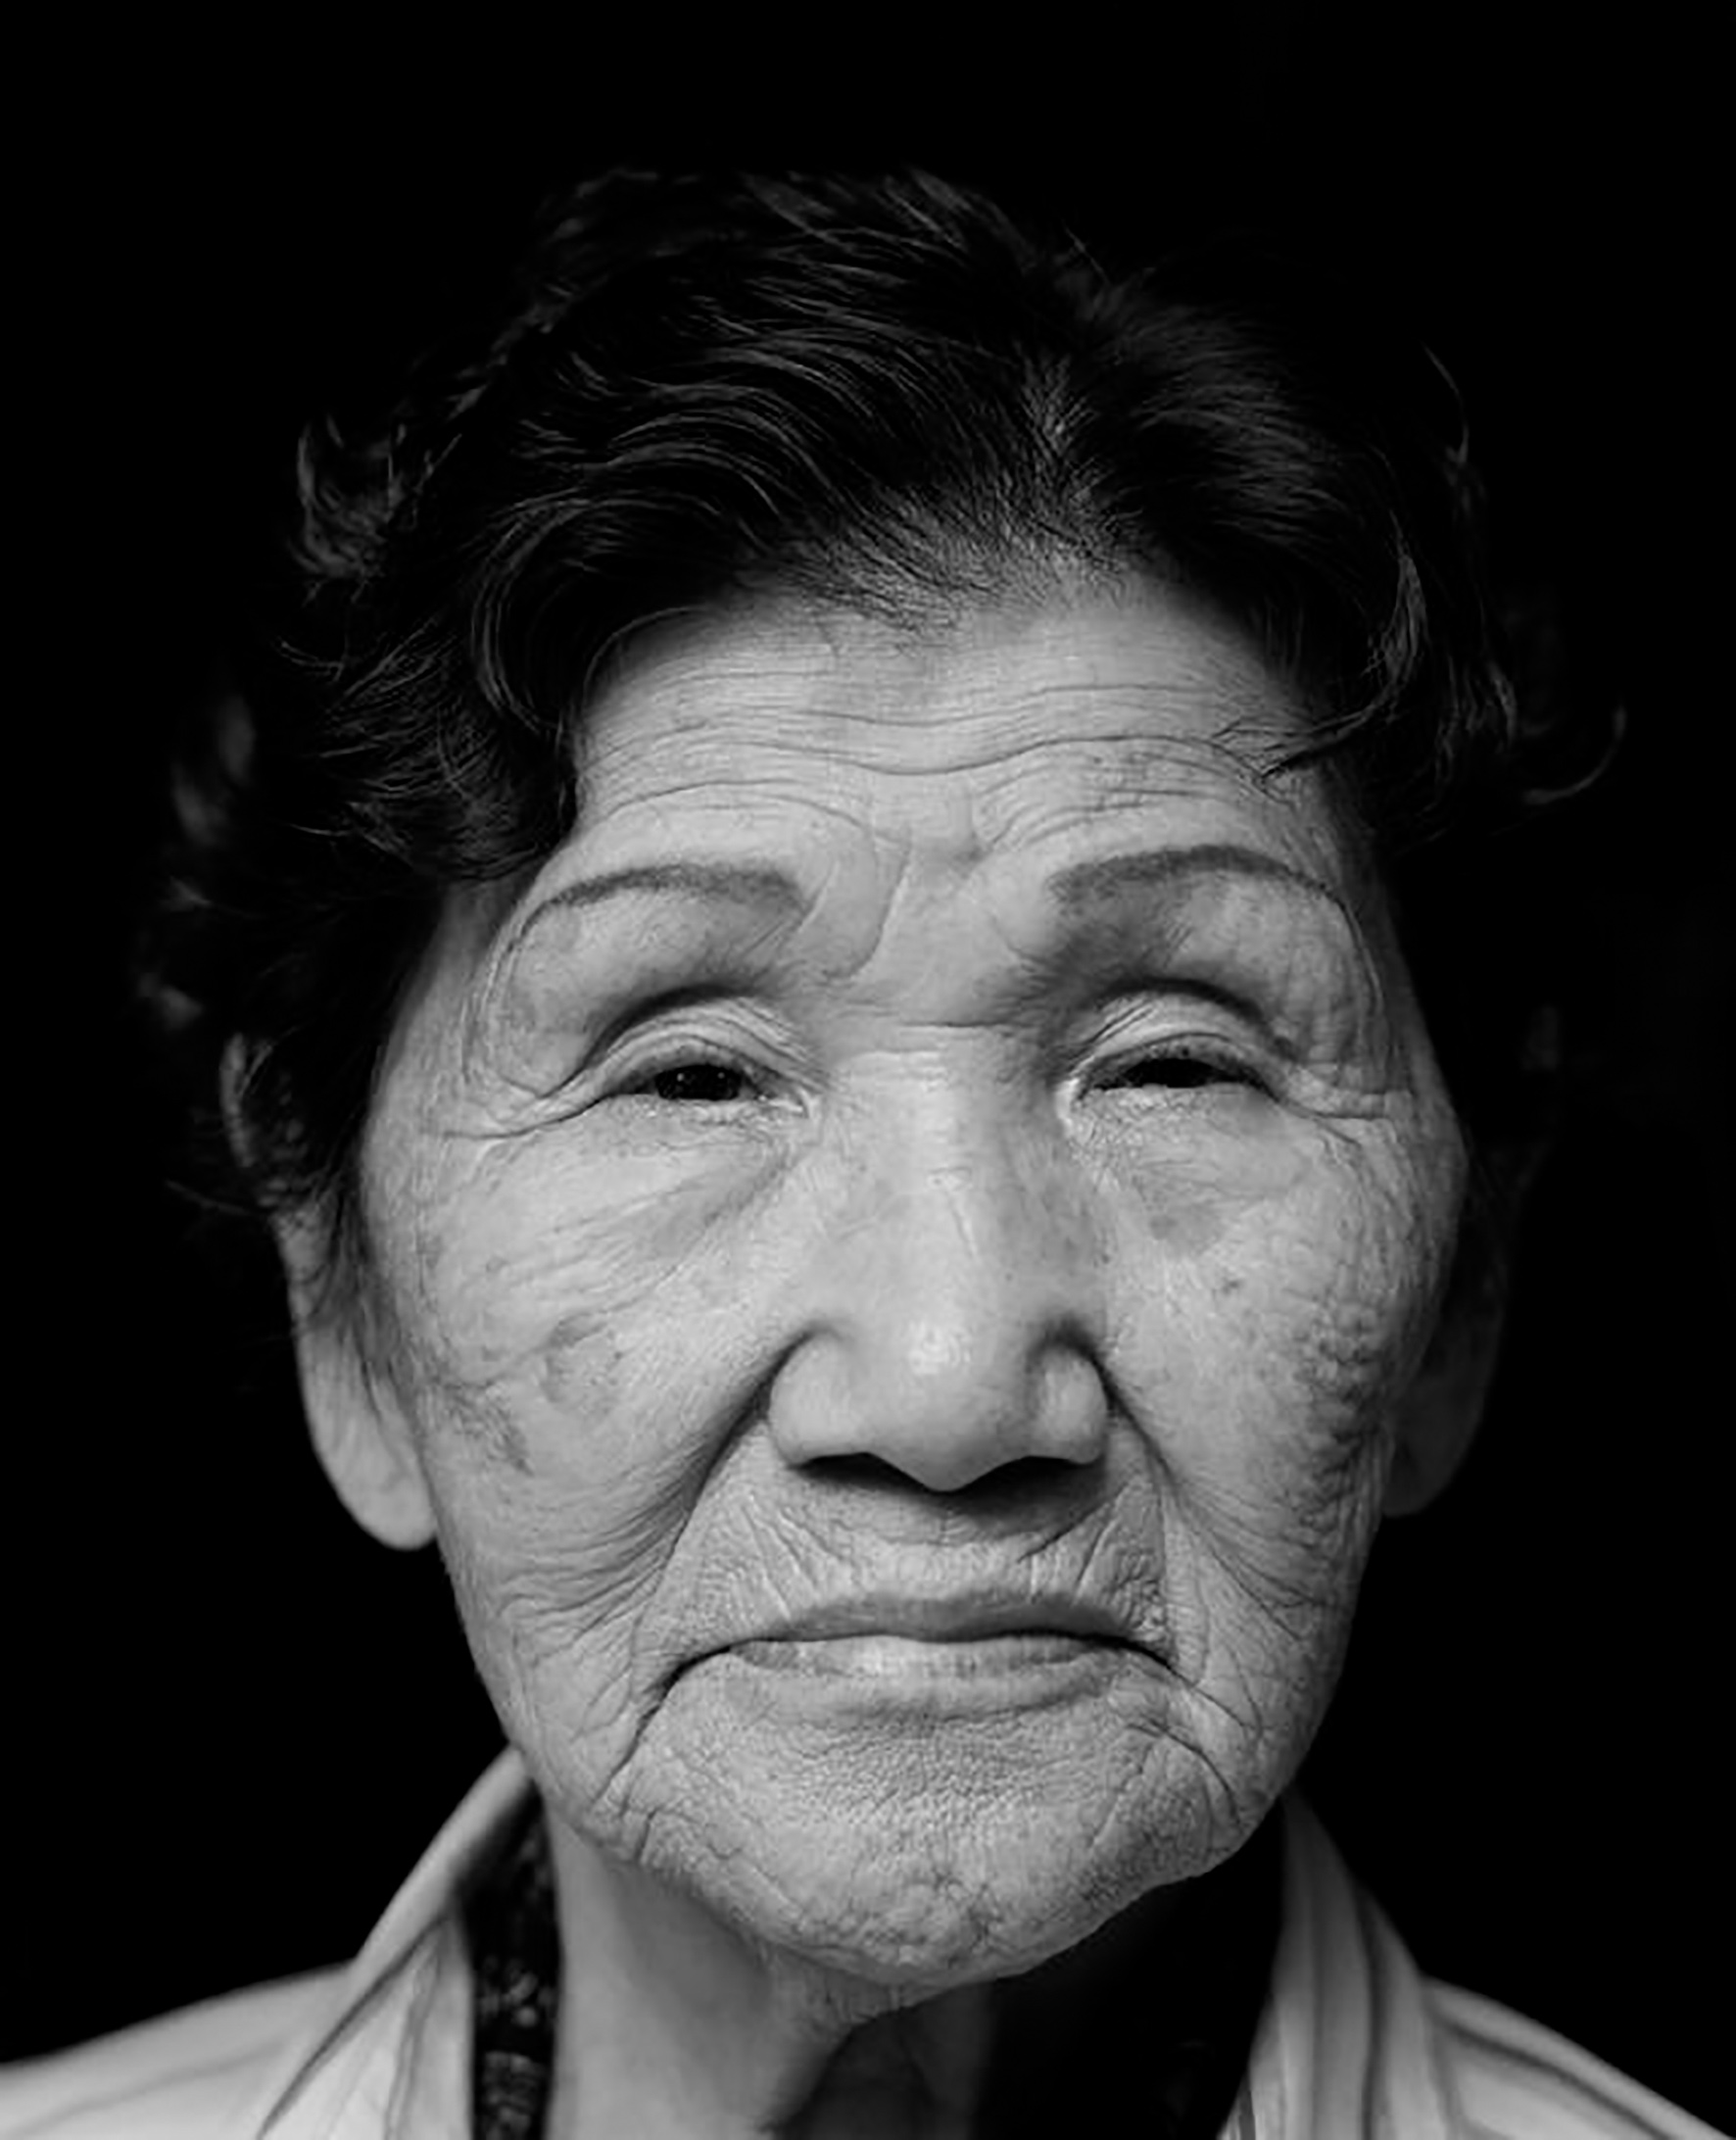 Korea. 2006. Comfort women. Jang Jum Dol